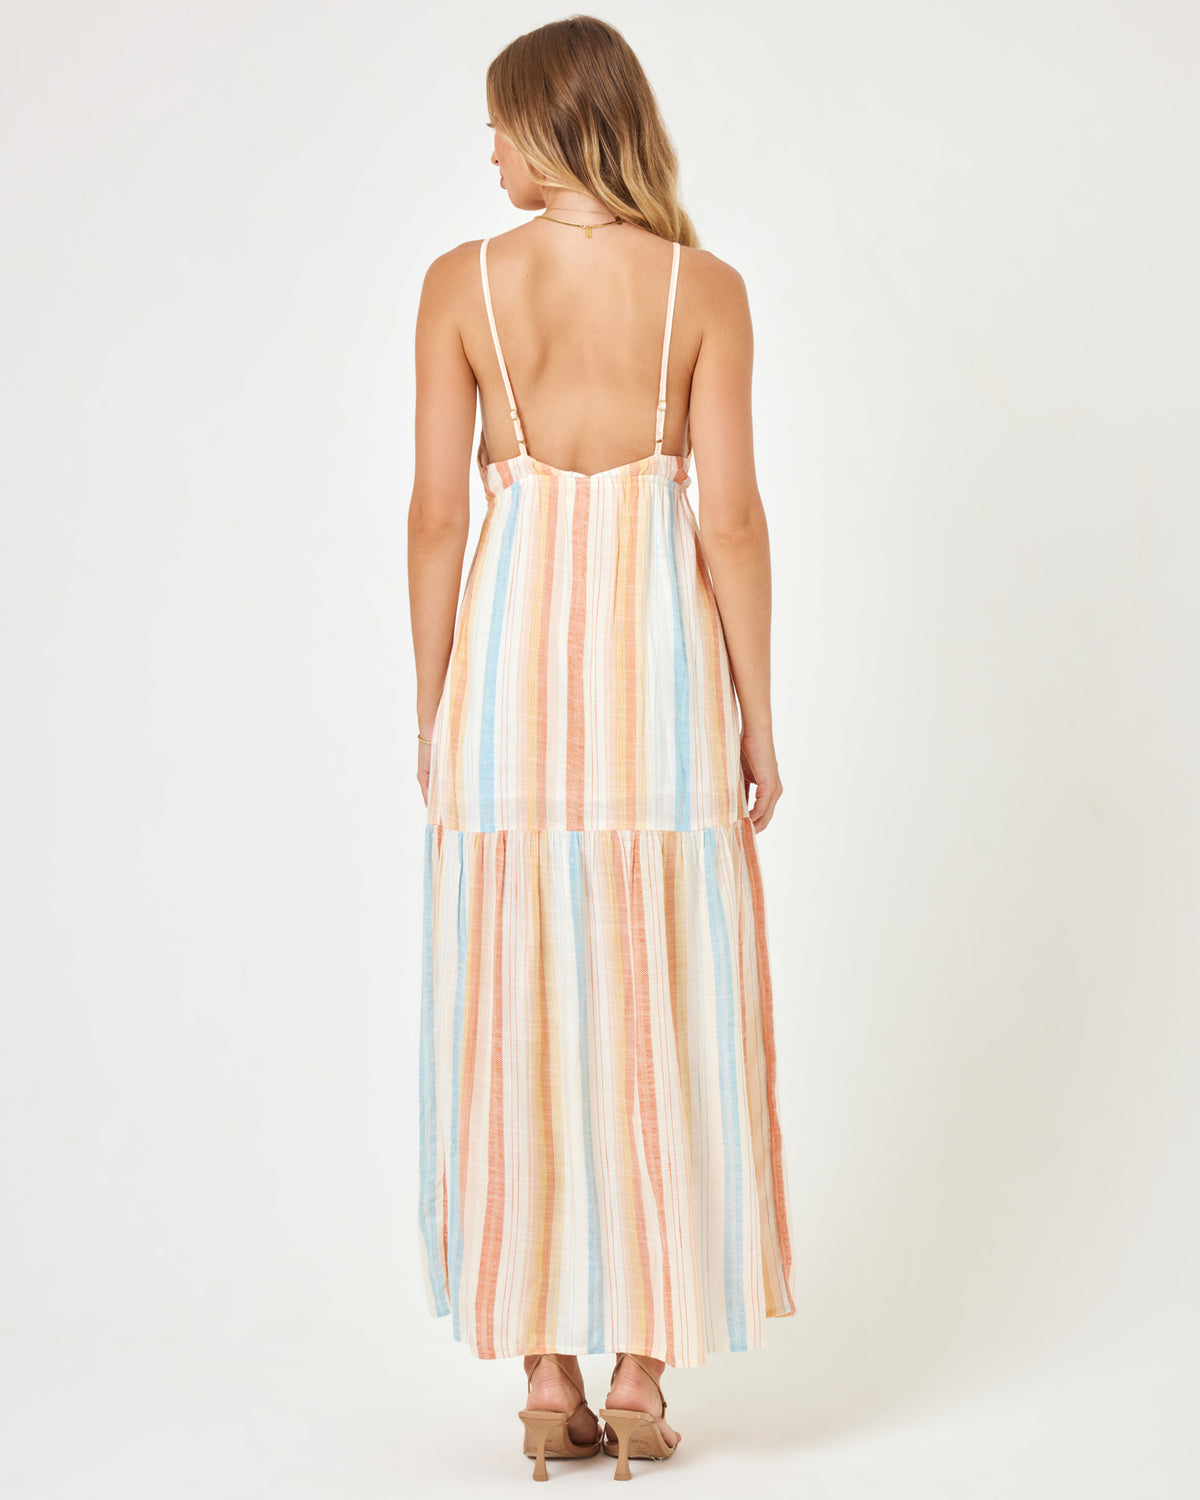 Printed Victoria Dress - Sunset Skies Stripe Sunset Skies Stripe | Model: Taylor (size: S)